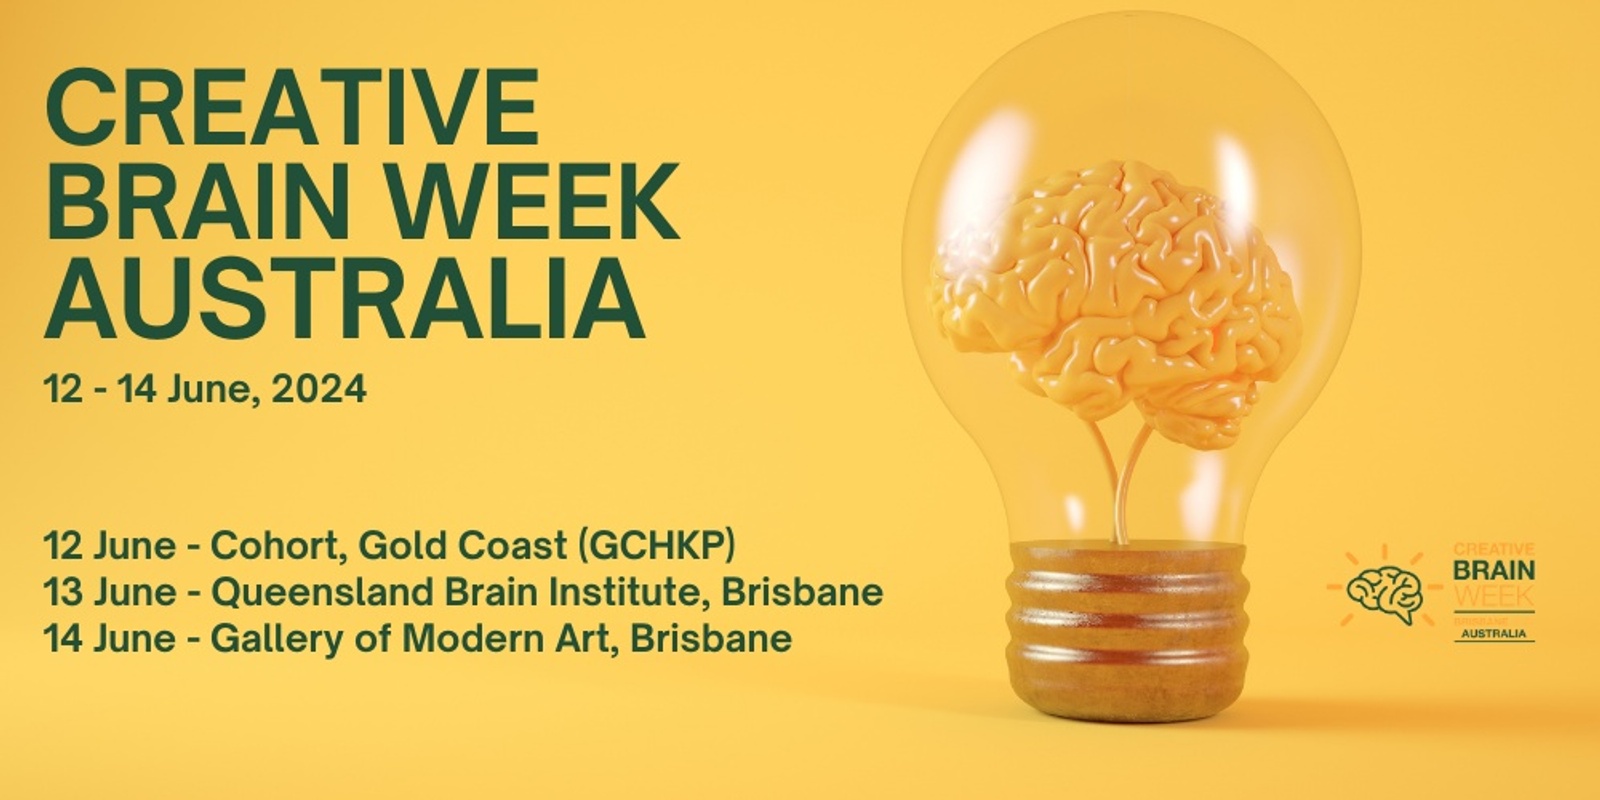 Banner image for Creative Brain Week Australia